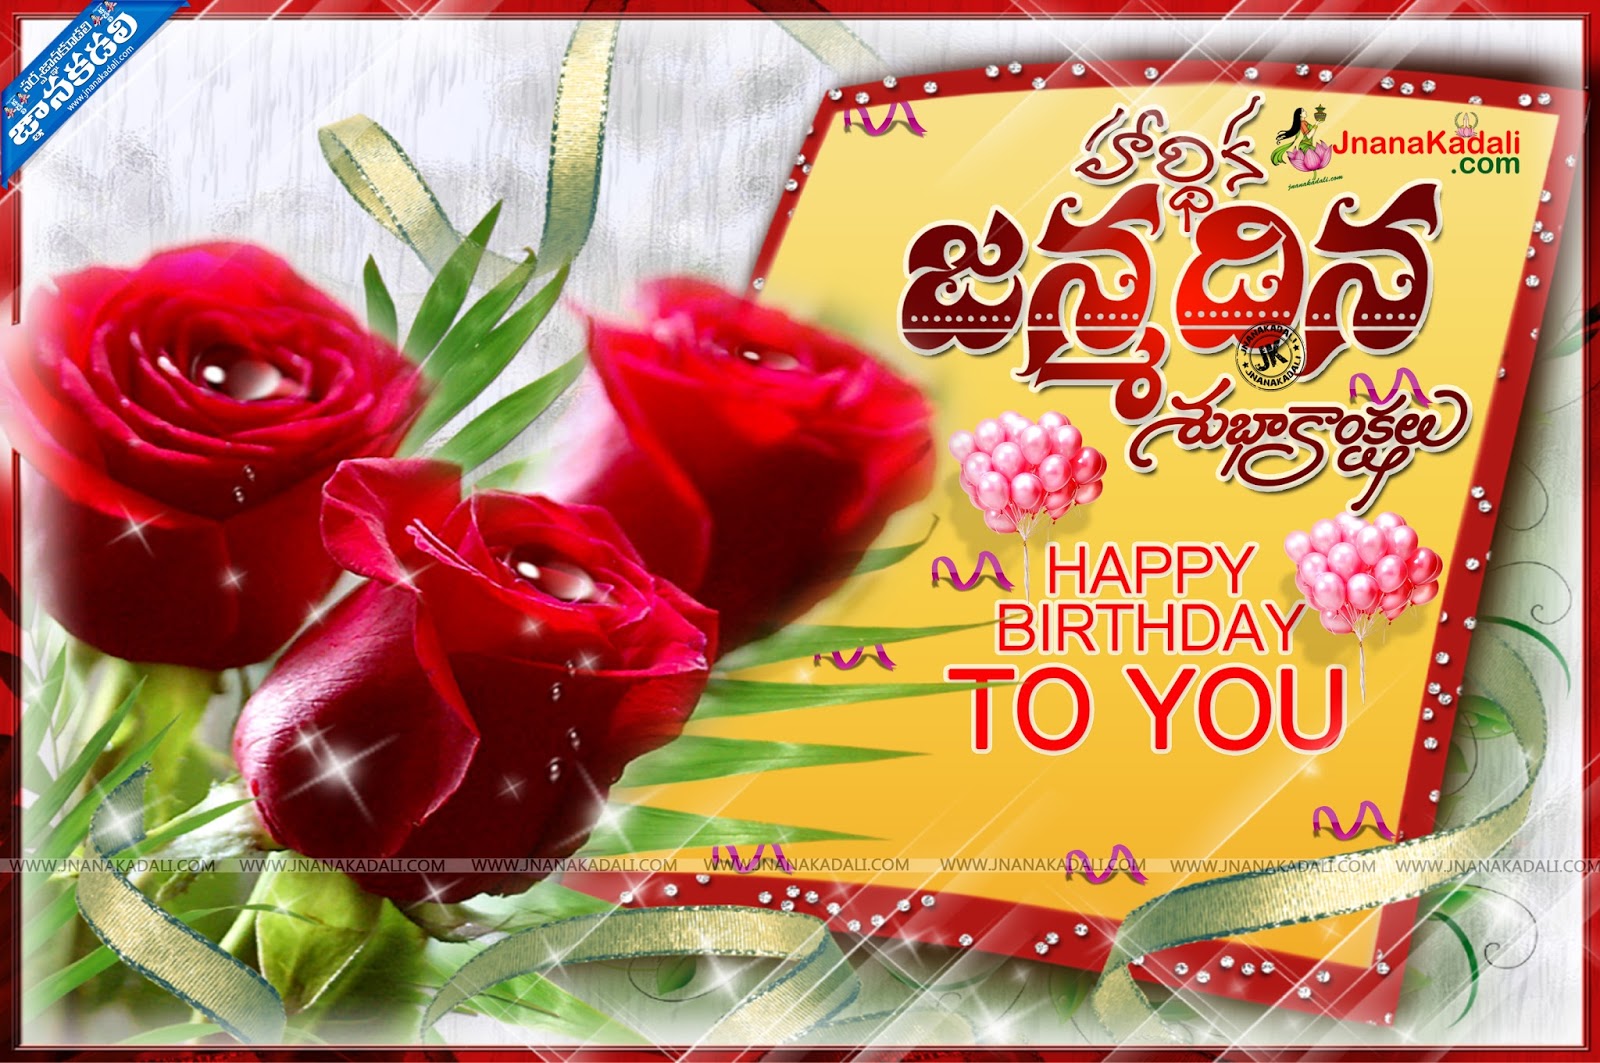 Telugu Happy Birthday Wishes and Quotes on flowers Nice Telugu ...